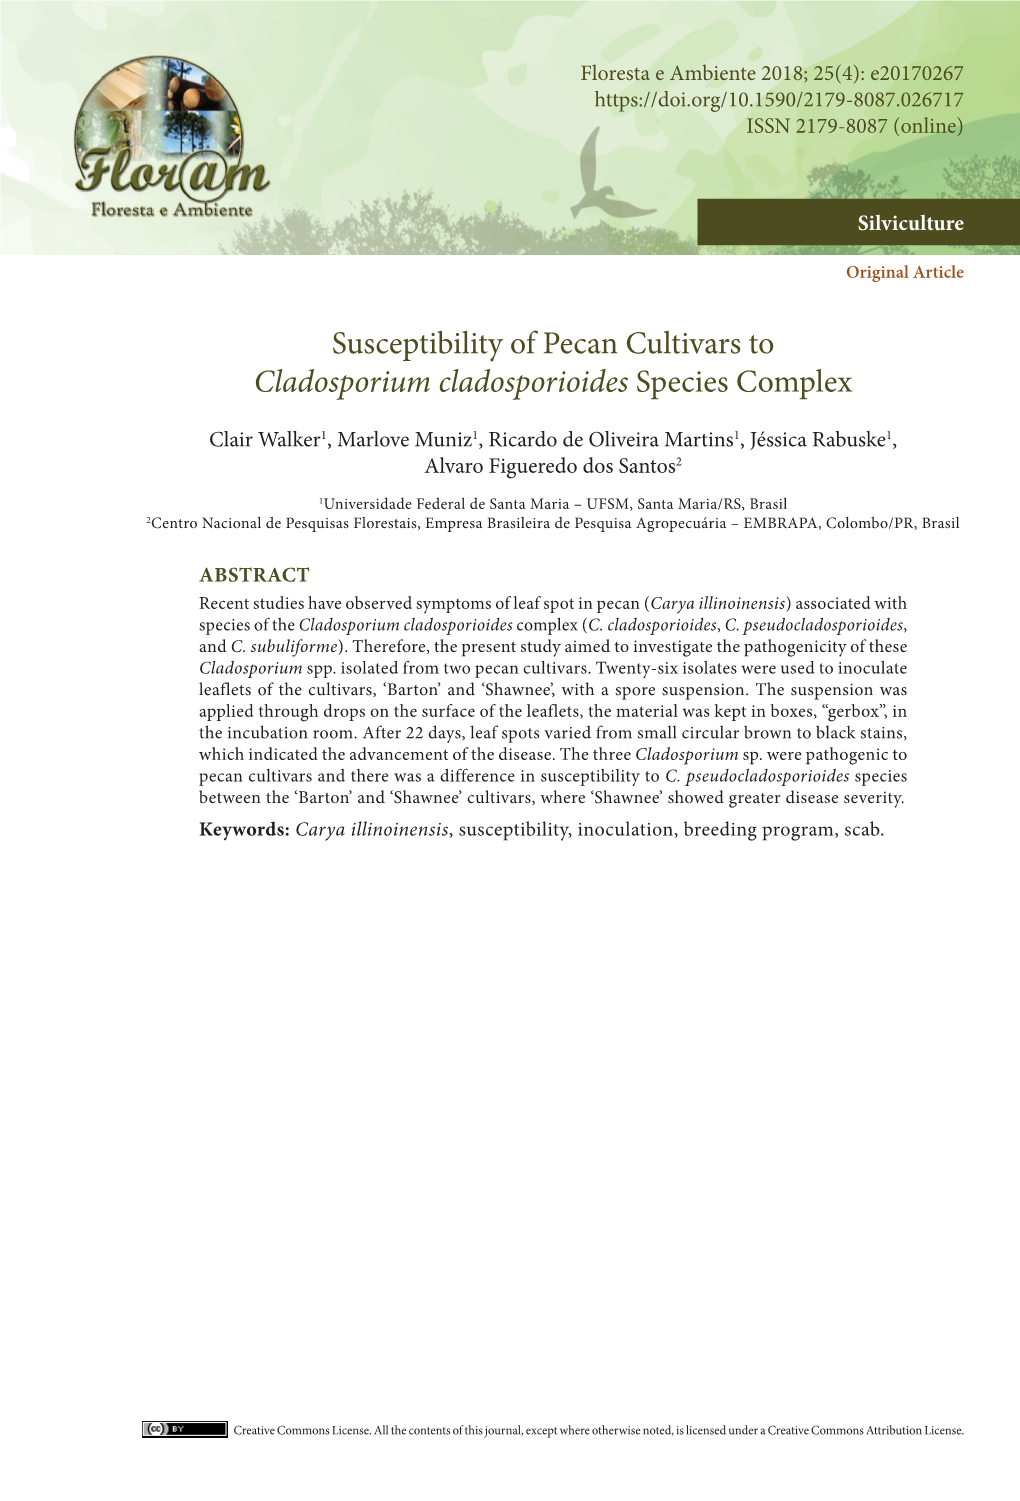 Susceptibility of Pecan Cultivars to Cladosporium Cladosporioides Species Complex